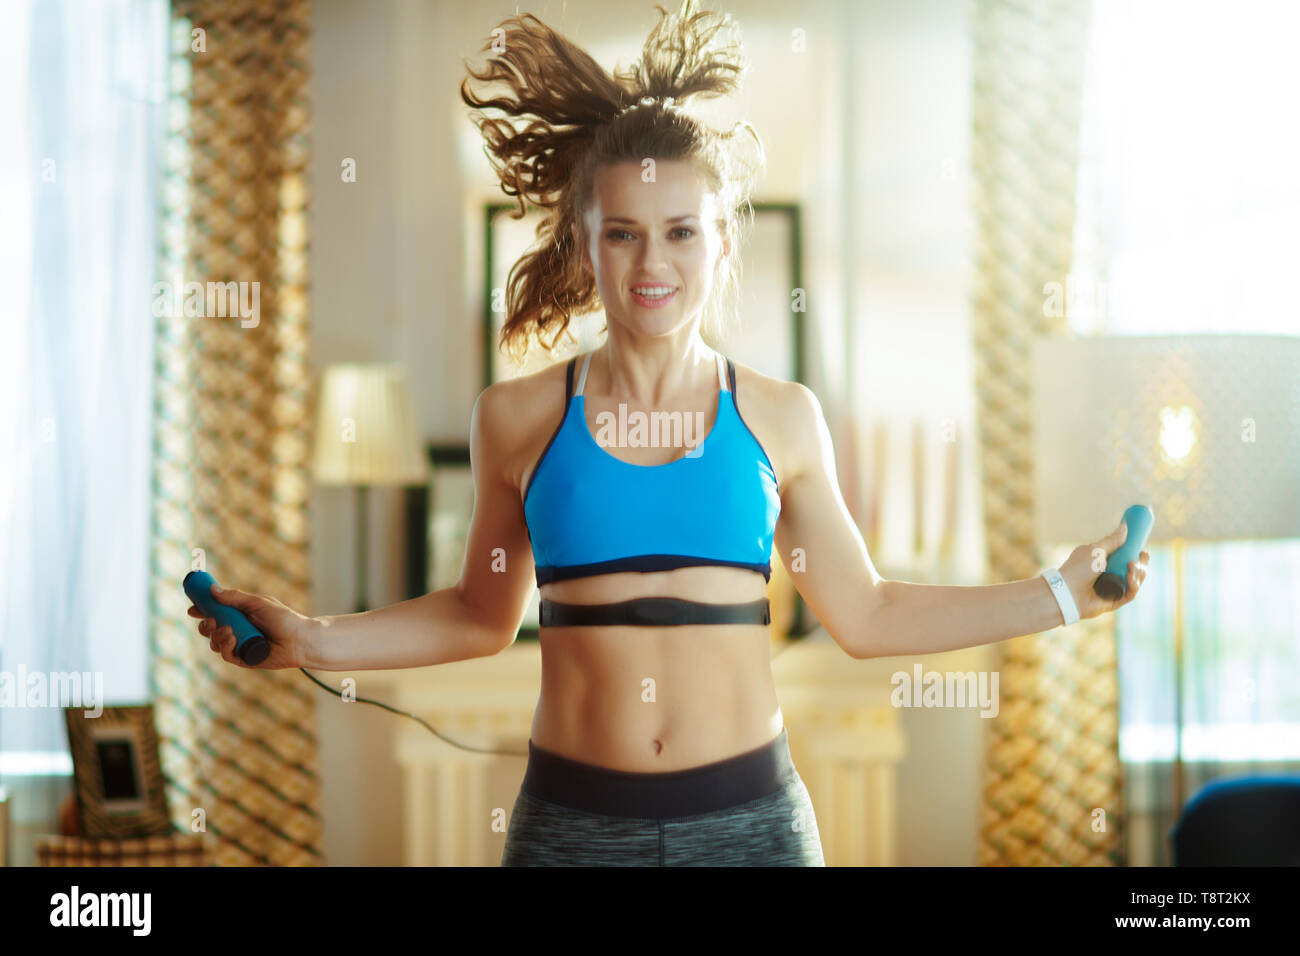 Mujer fitness positiva en ropa deportiva con saltar la cuerda en el estudio  mujer fitness en ropa deportiva